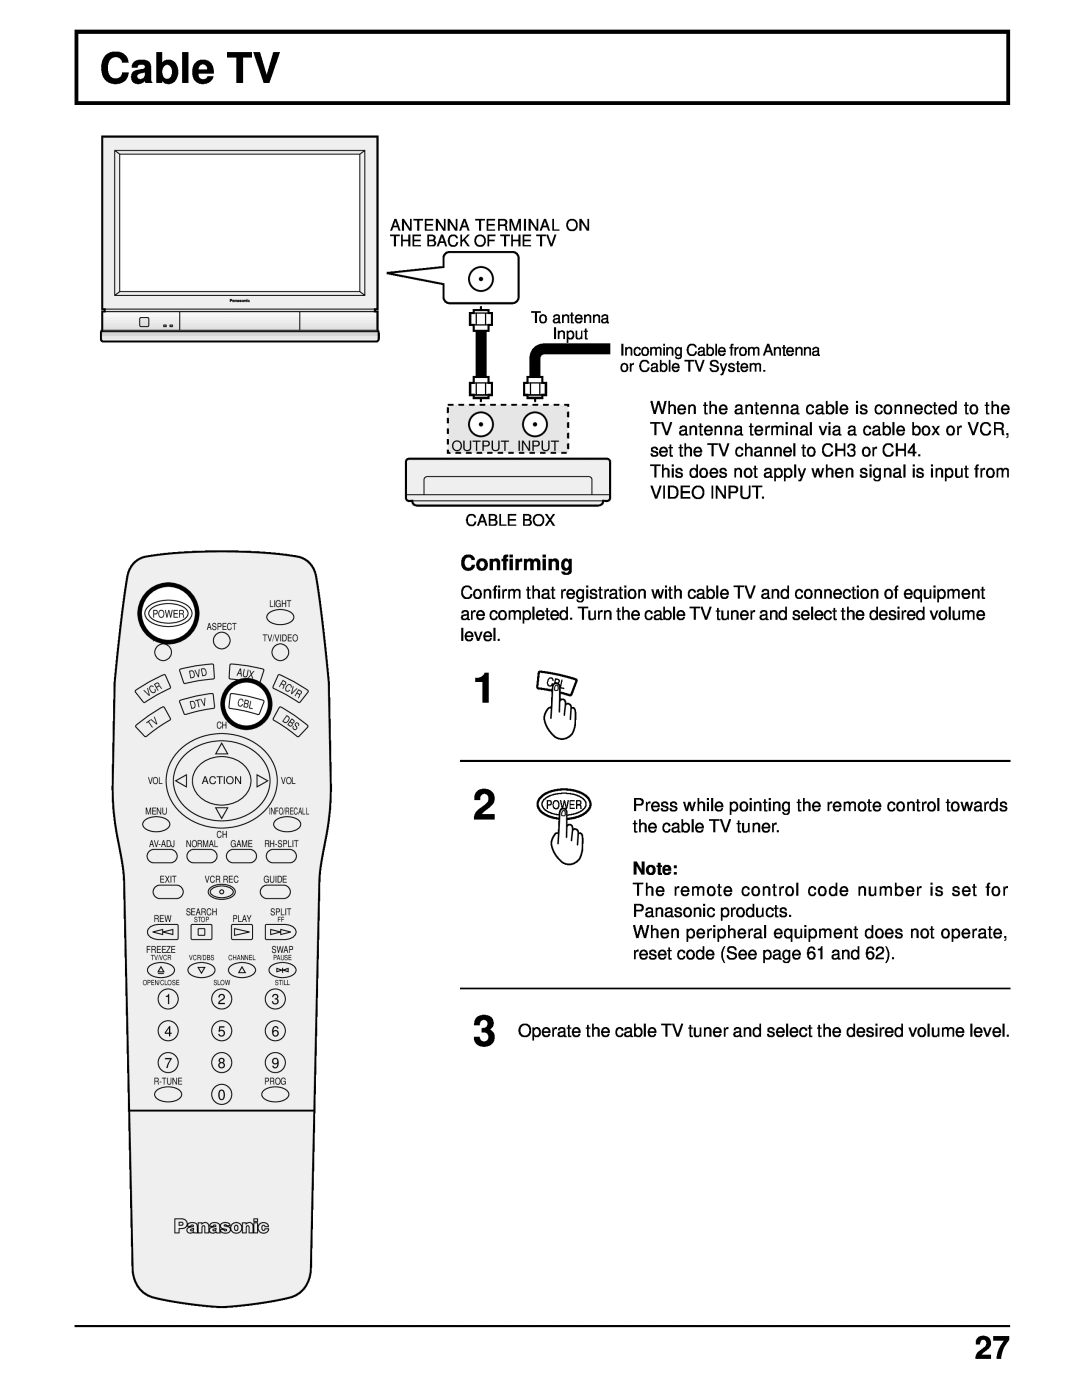 Panasonic CT 34WX50 manual Cable TV, Confirming 